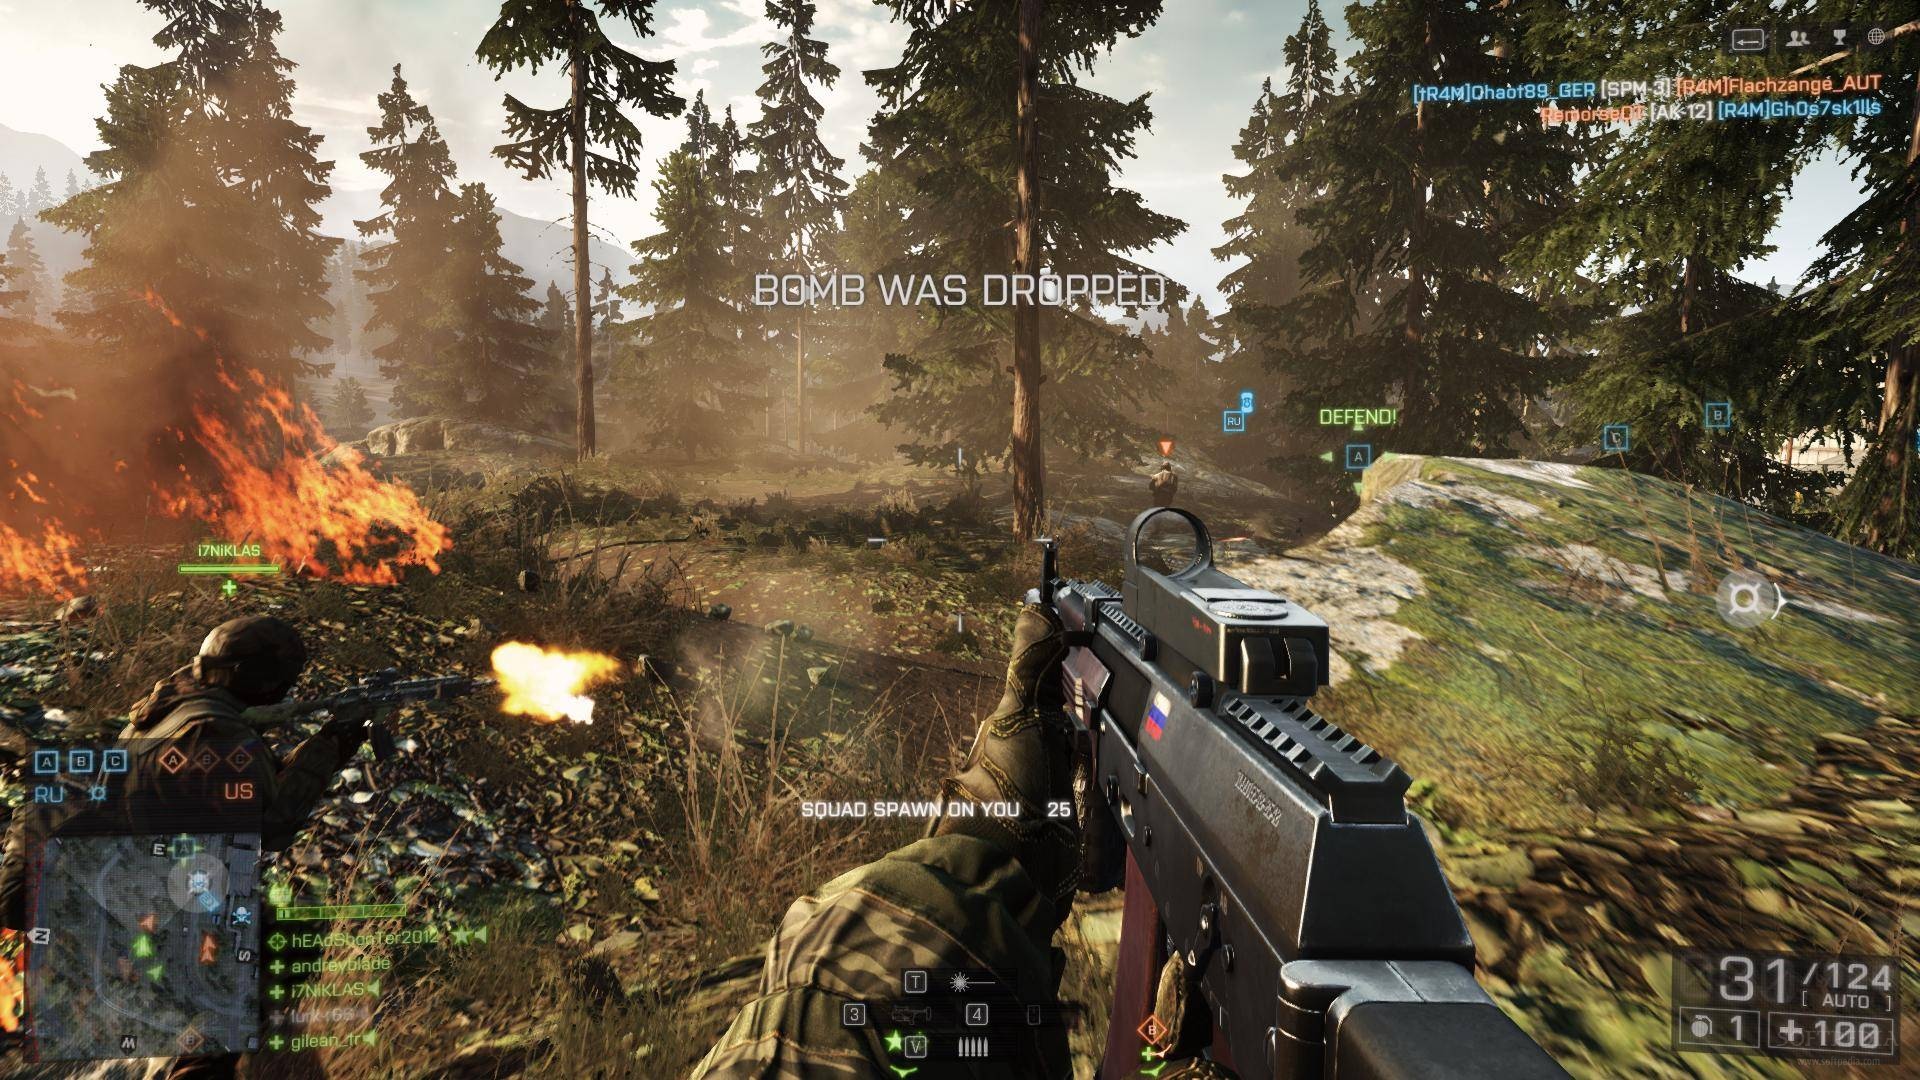 Battlefield 4 Battlelog Gets Updated with Bug Fixes, Second